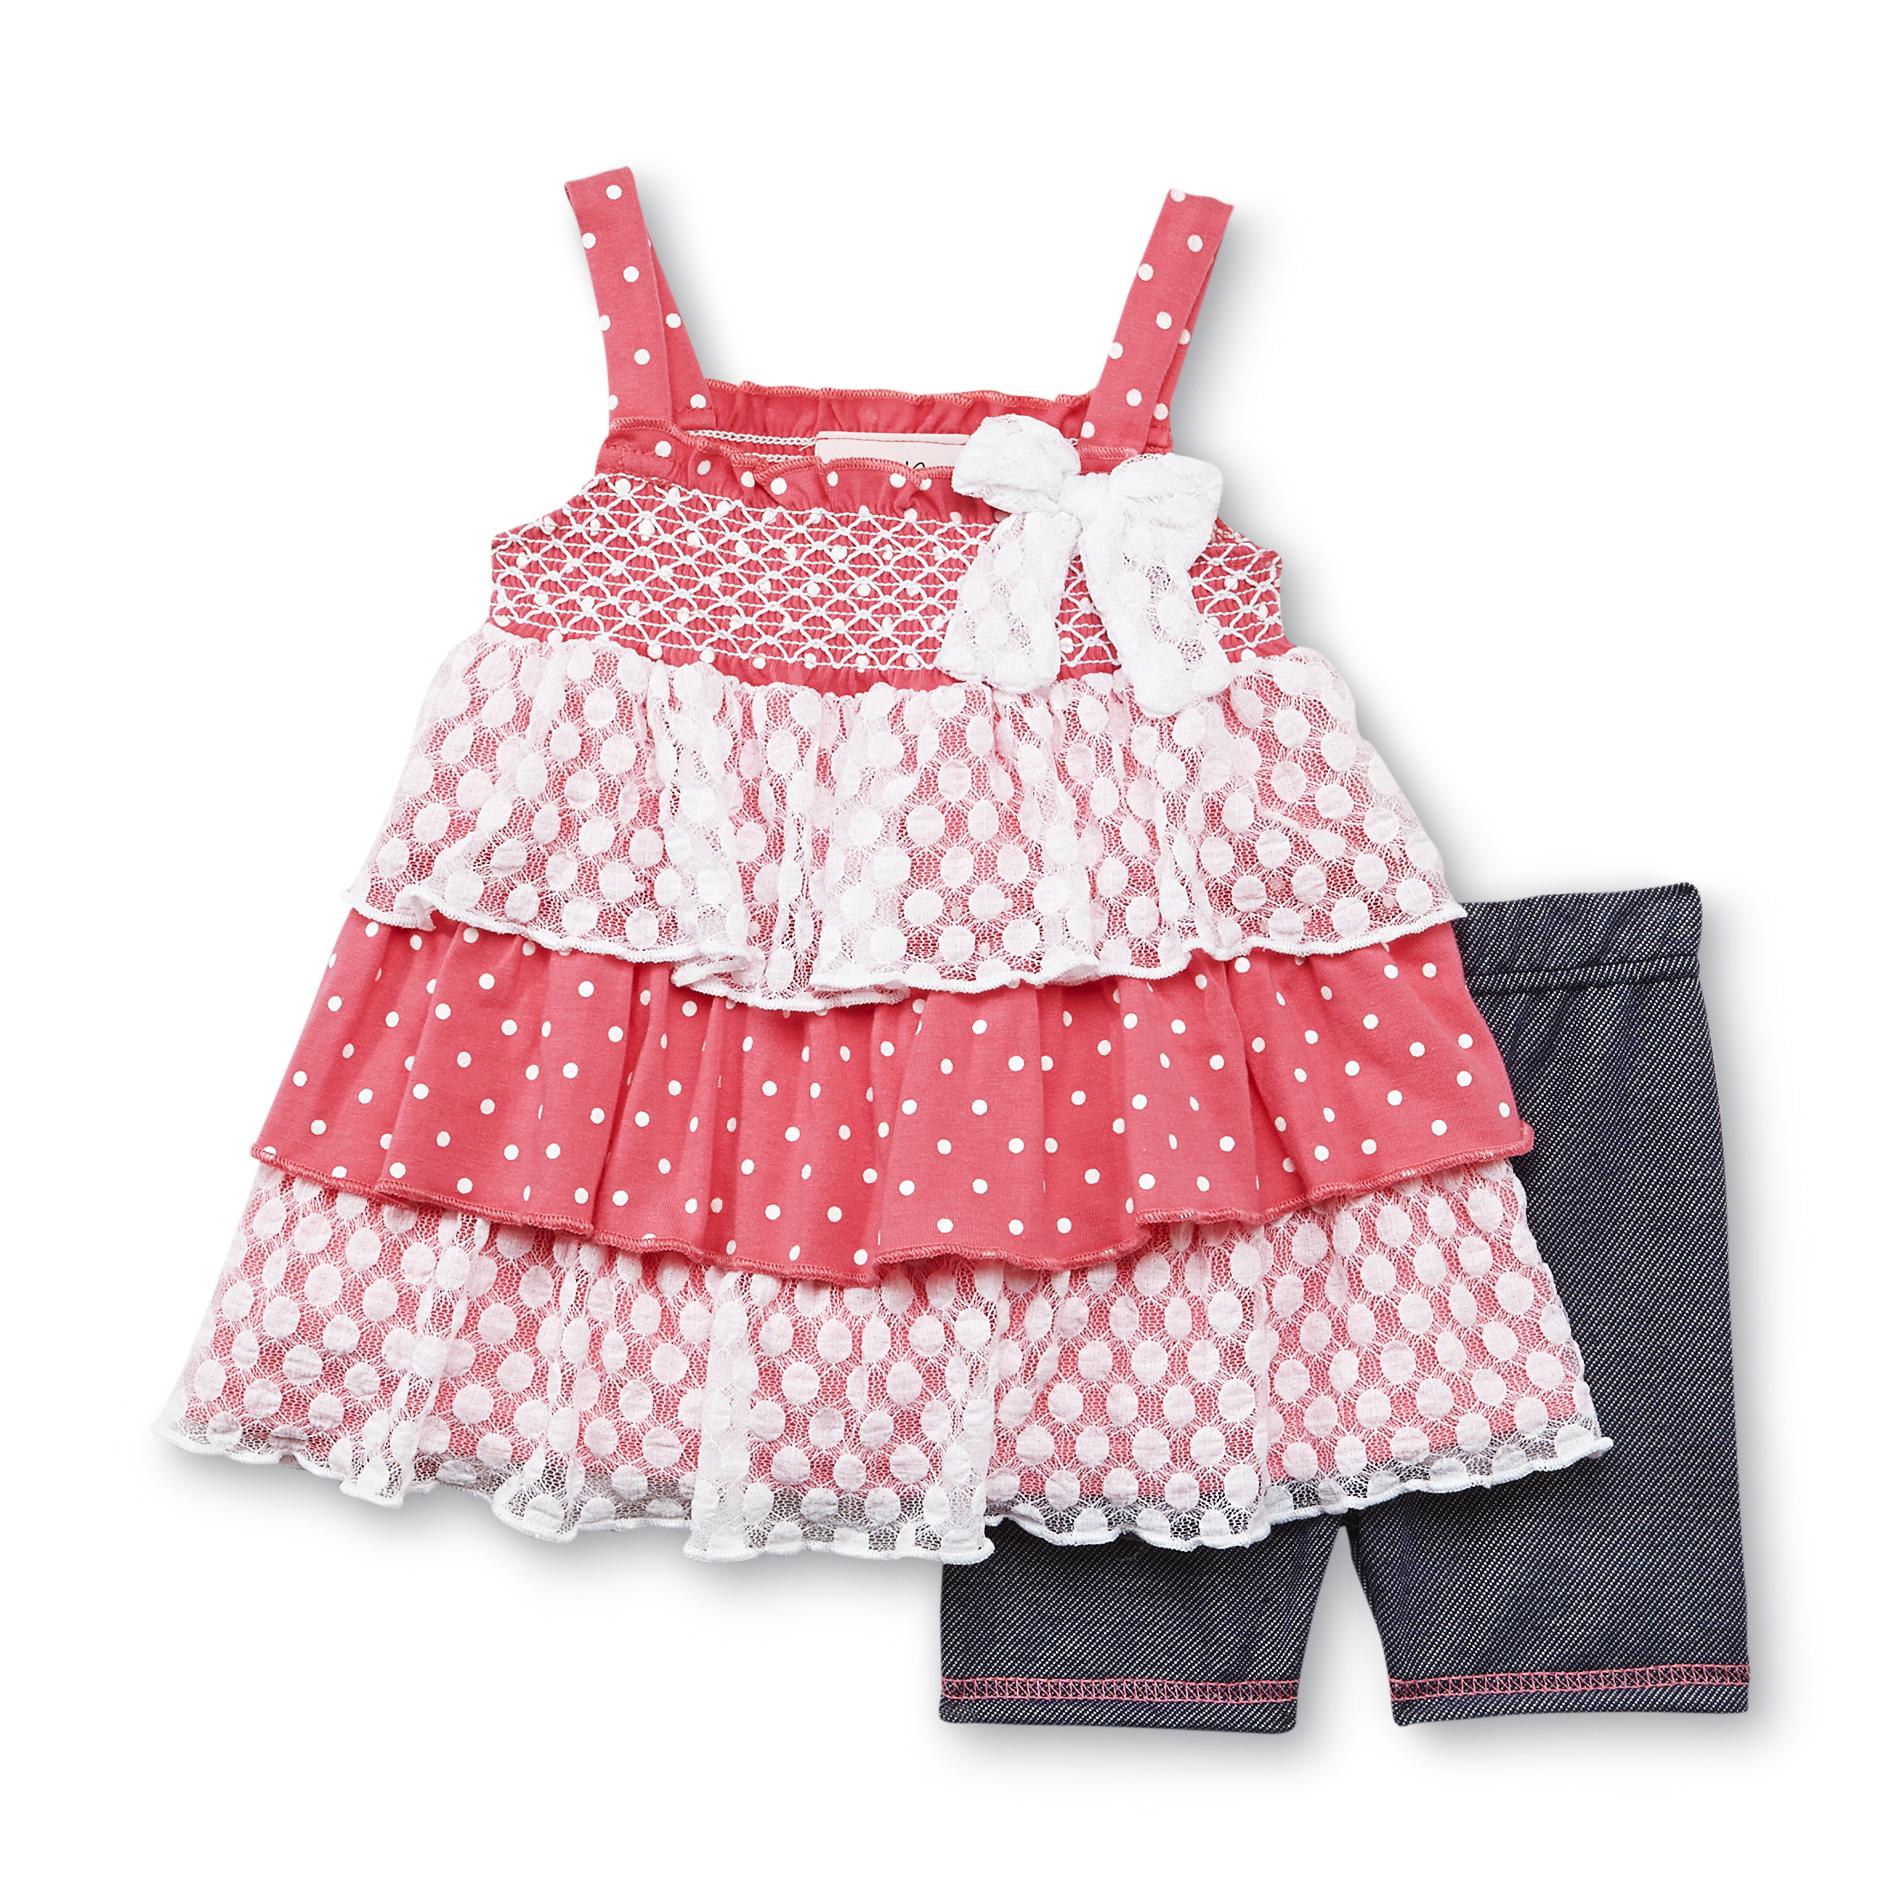 Little Lass Infant & Toddler Girl's Tunic & Shorts - Polka Dot & Lace